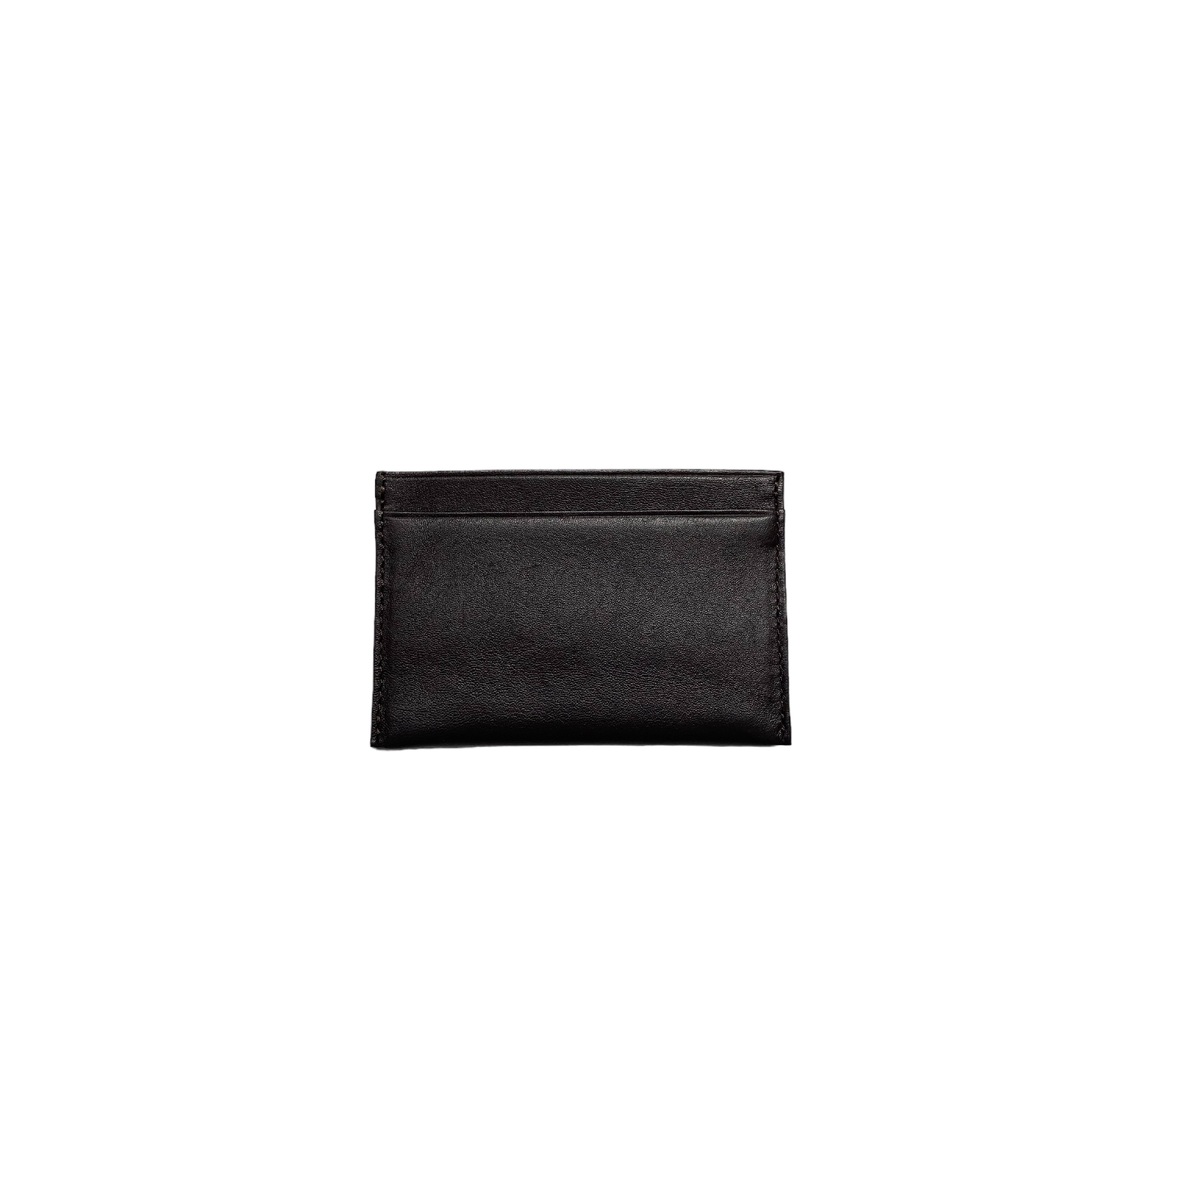 KW3180 Card Case Black kangaroo leather